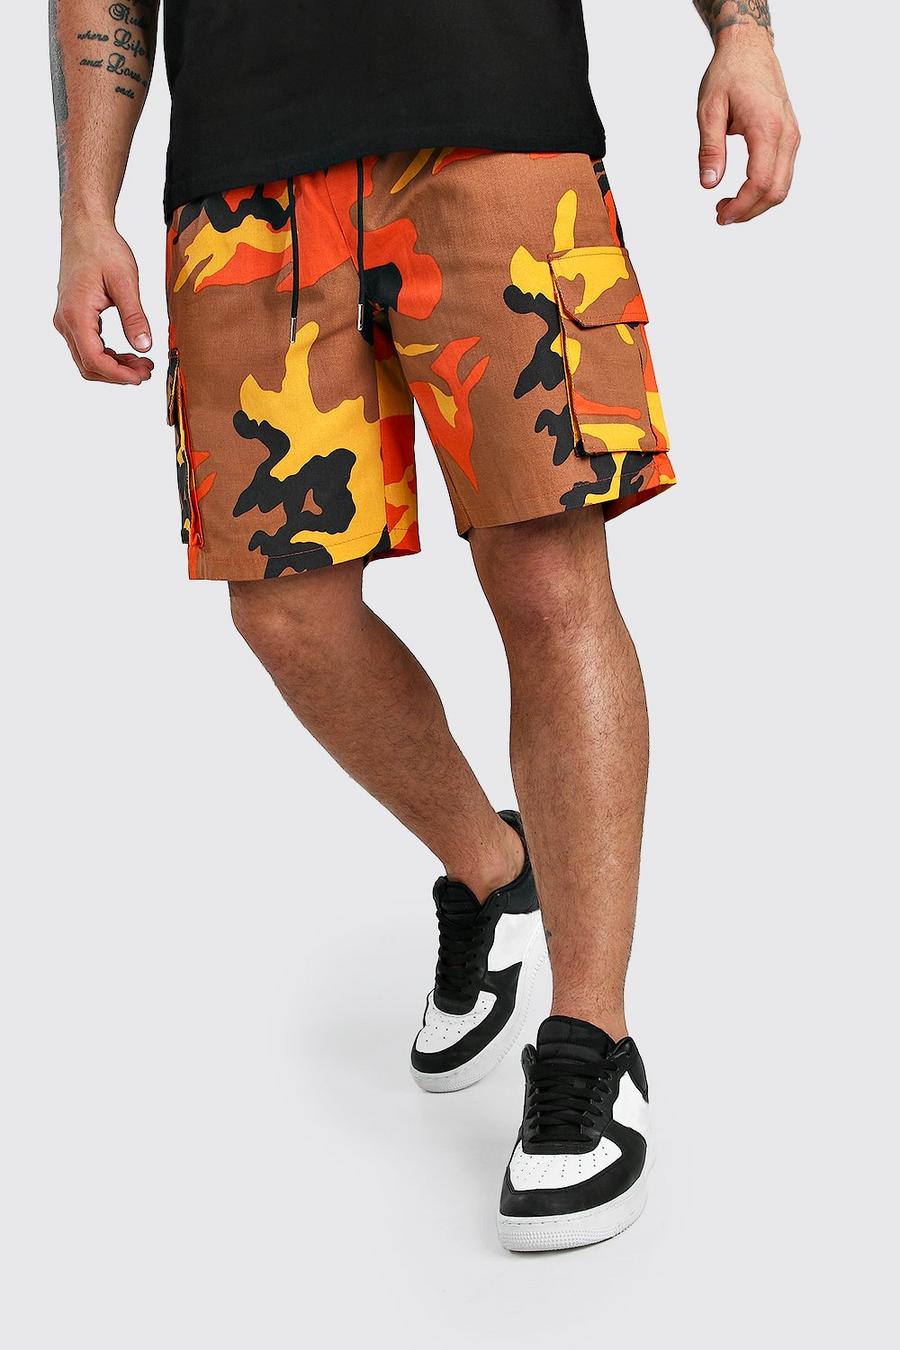 Pantalones cortos estilo militar de camuflaje naranja utilitarios image number 1